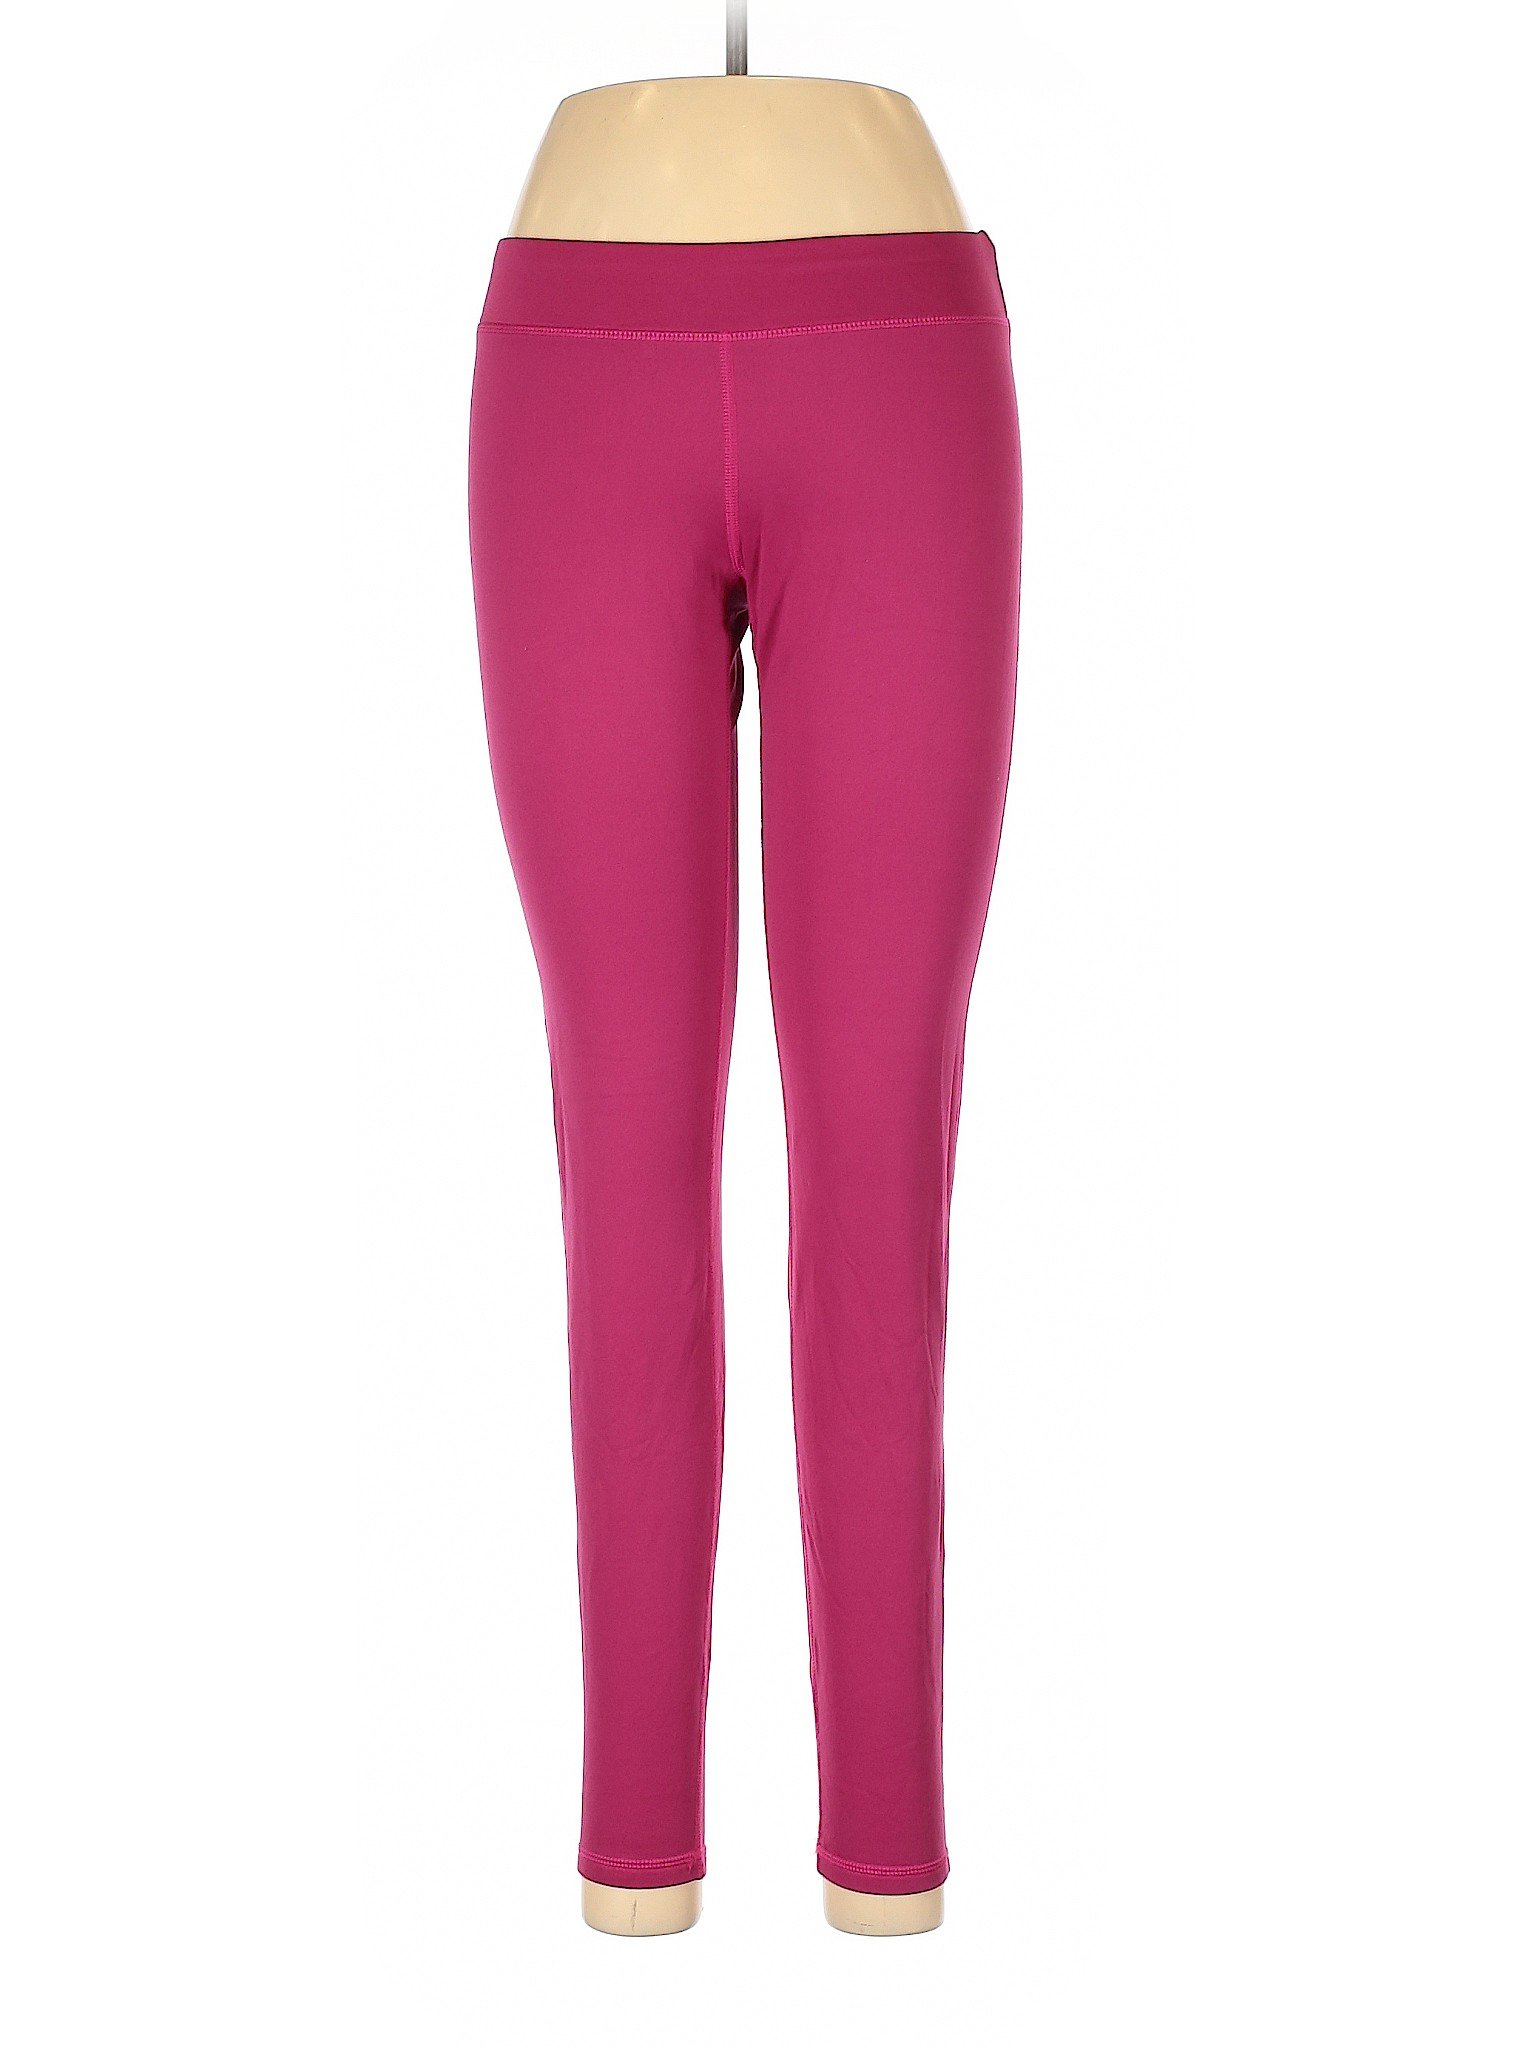 N.Y.L Sport Women Pink Active Pants M | eBay